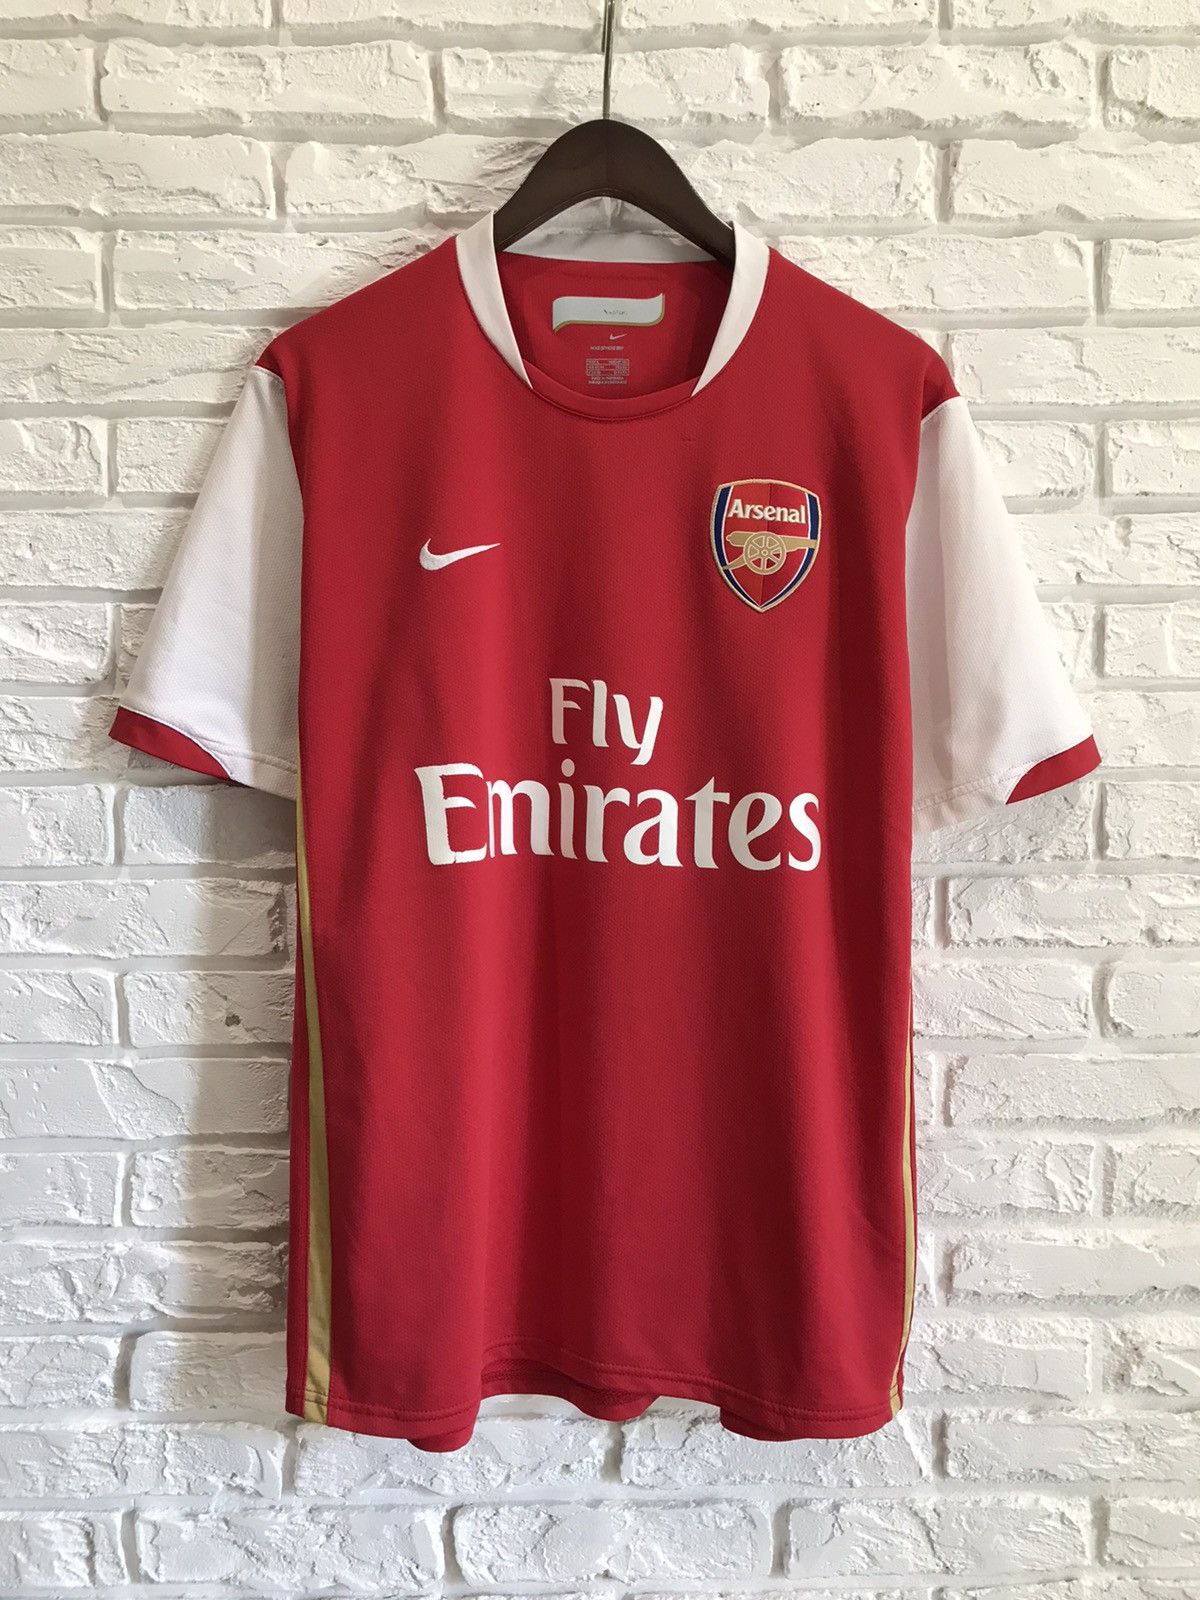 Nike Nike FC Arsenal Away Home Senderos #6 Football Soccer Jersey Size US L / EU 52-54 / 3 - 1 Preview